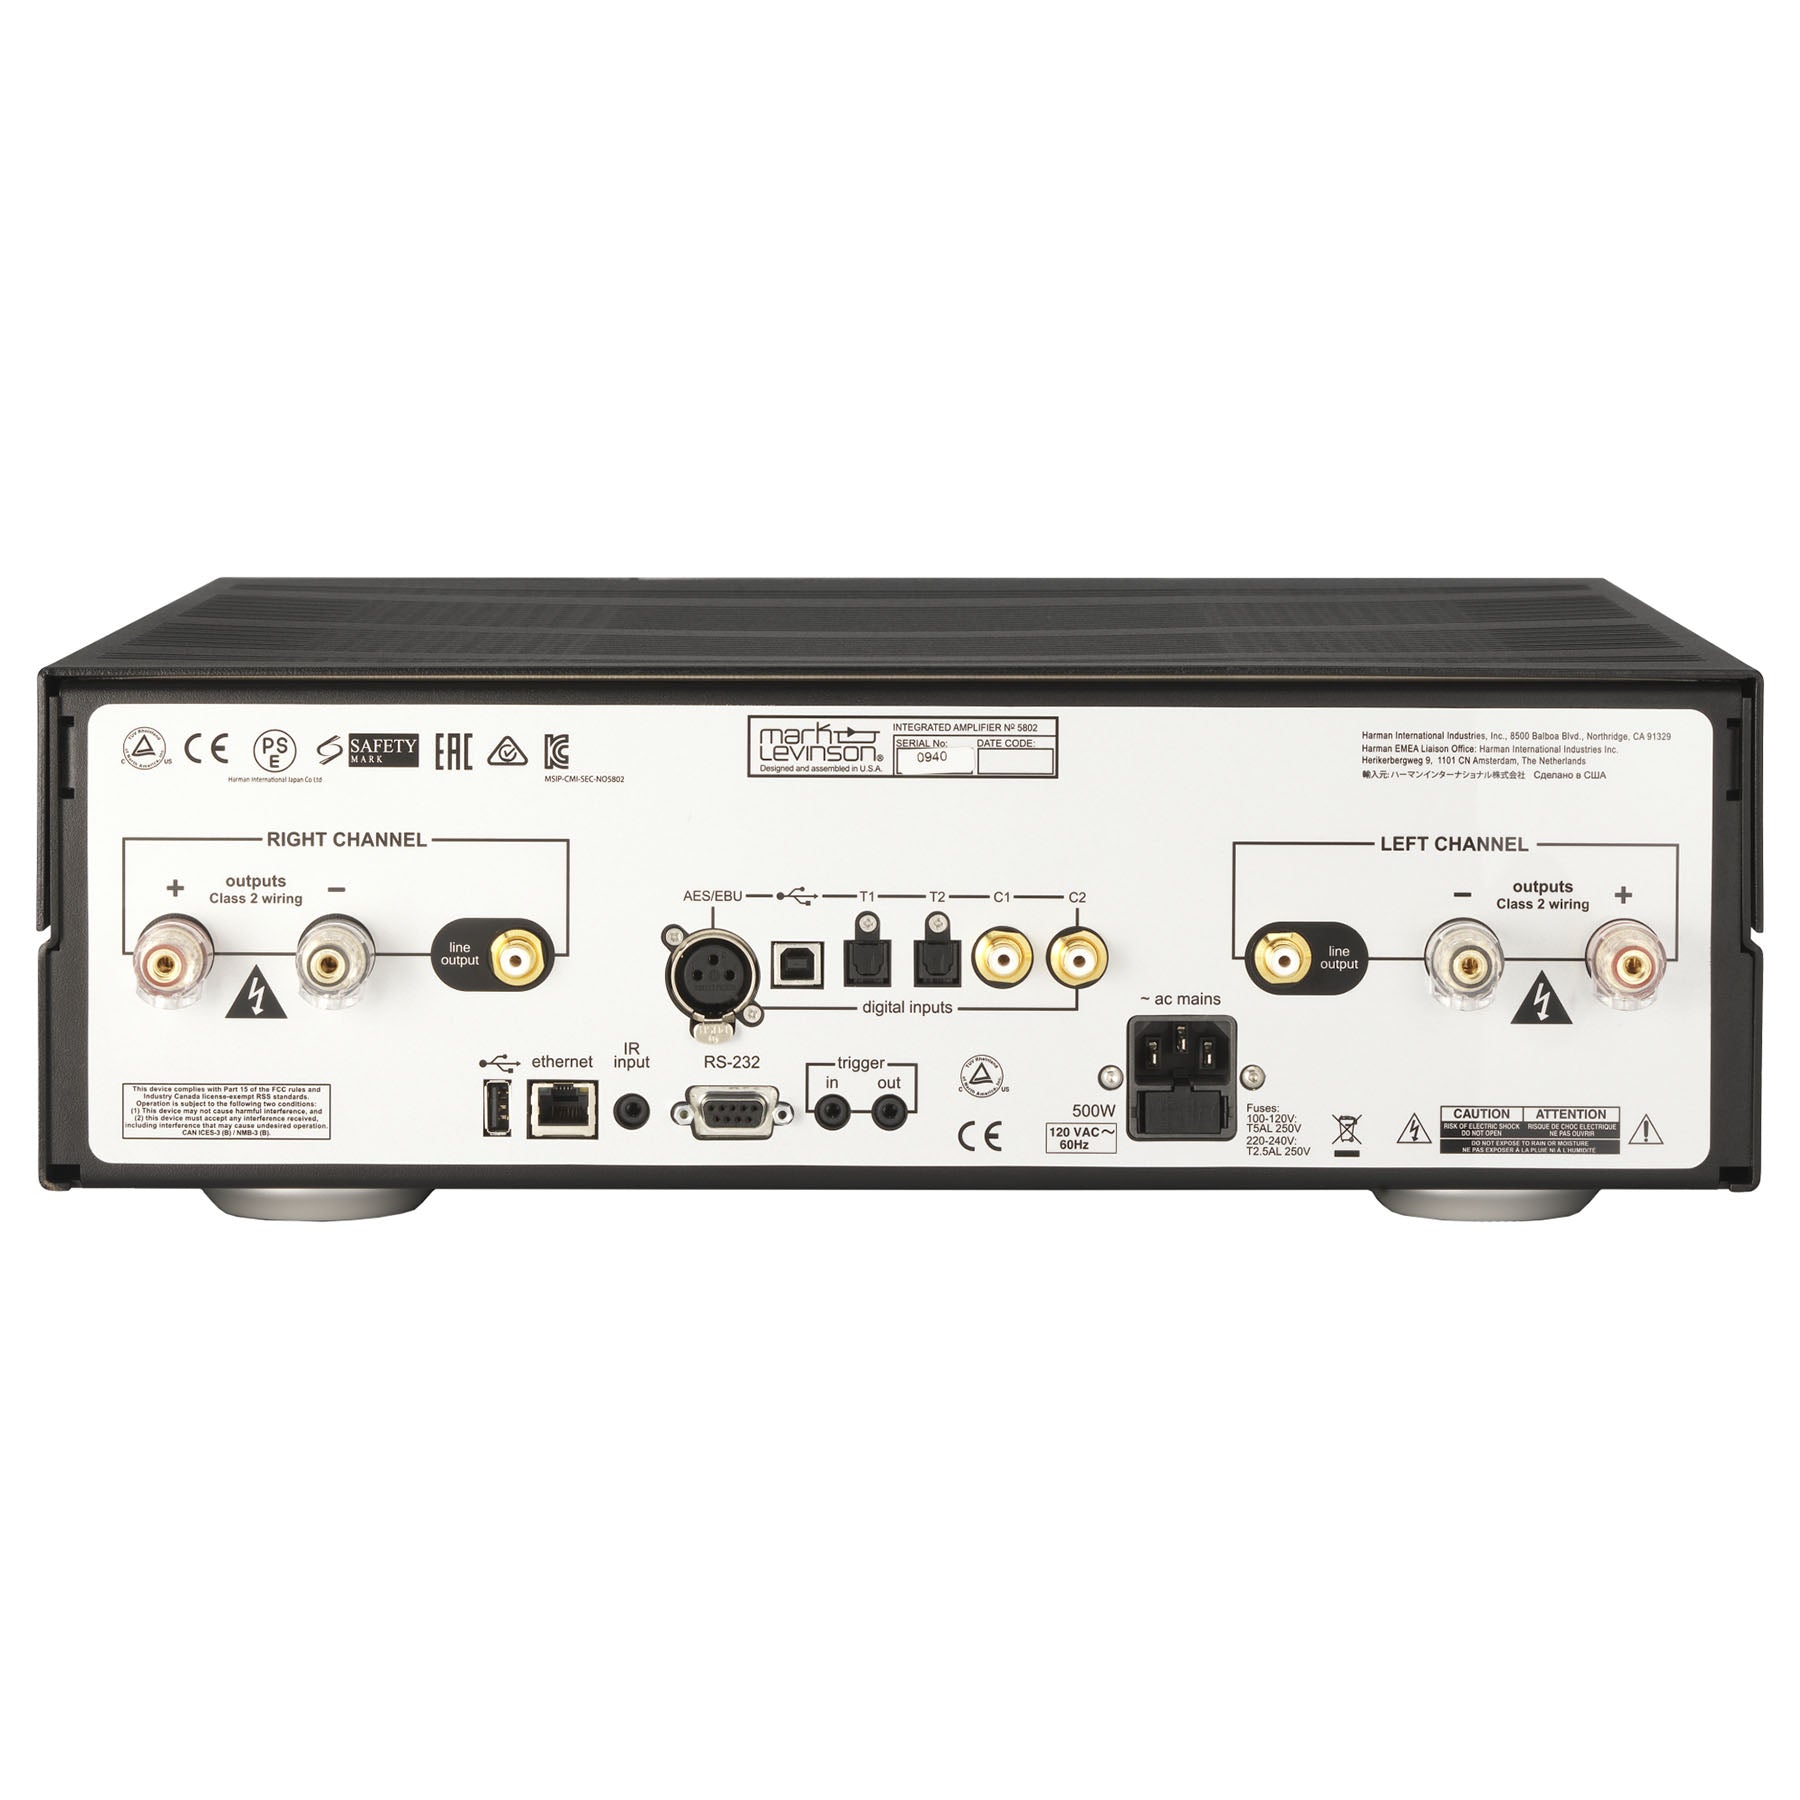 Mark Levinson No 5802 Integrated Amplifier for Digital Sources